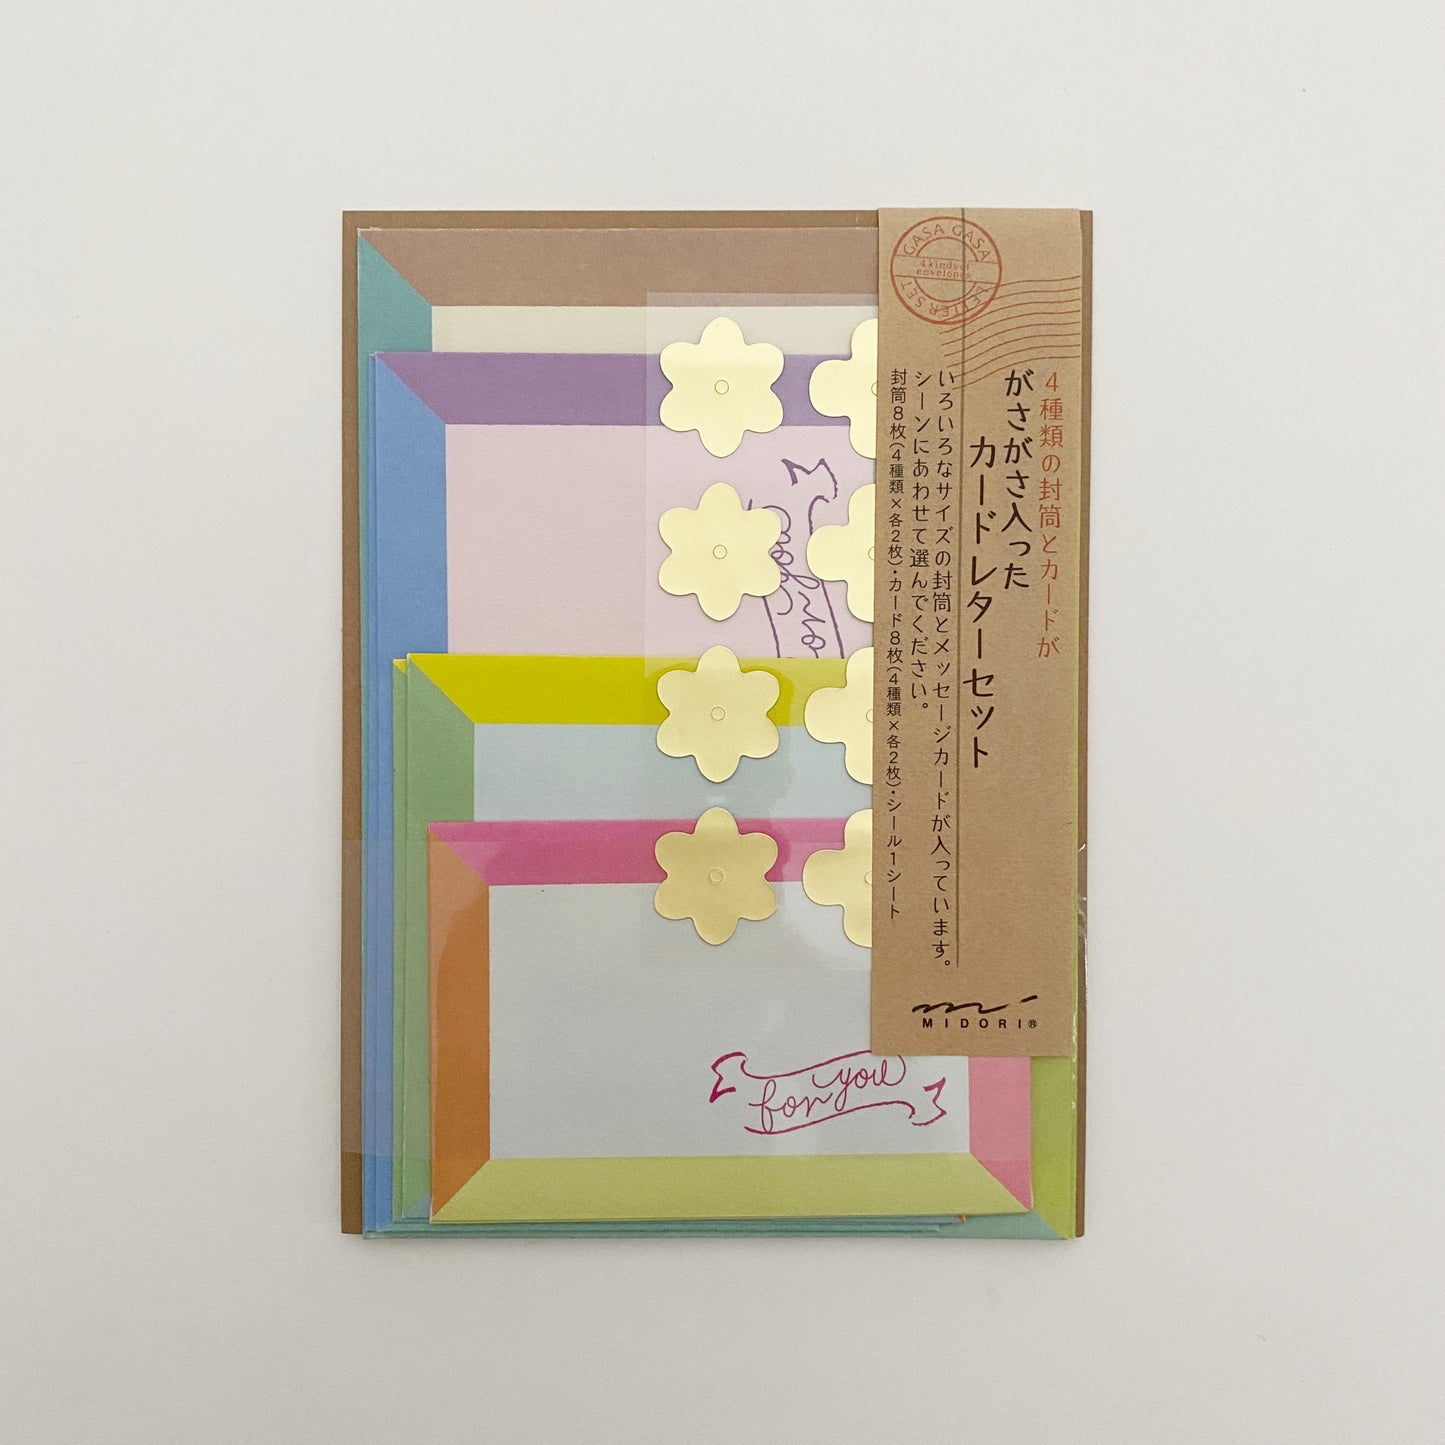 midori : card & envelope set - multi-colour